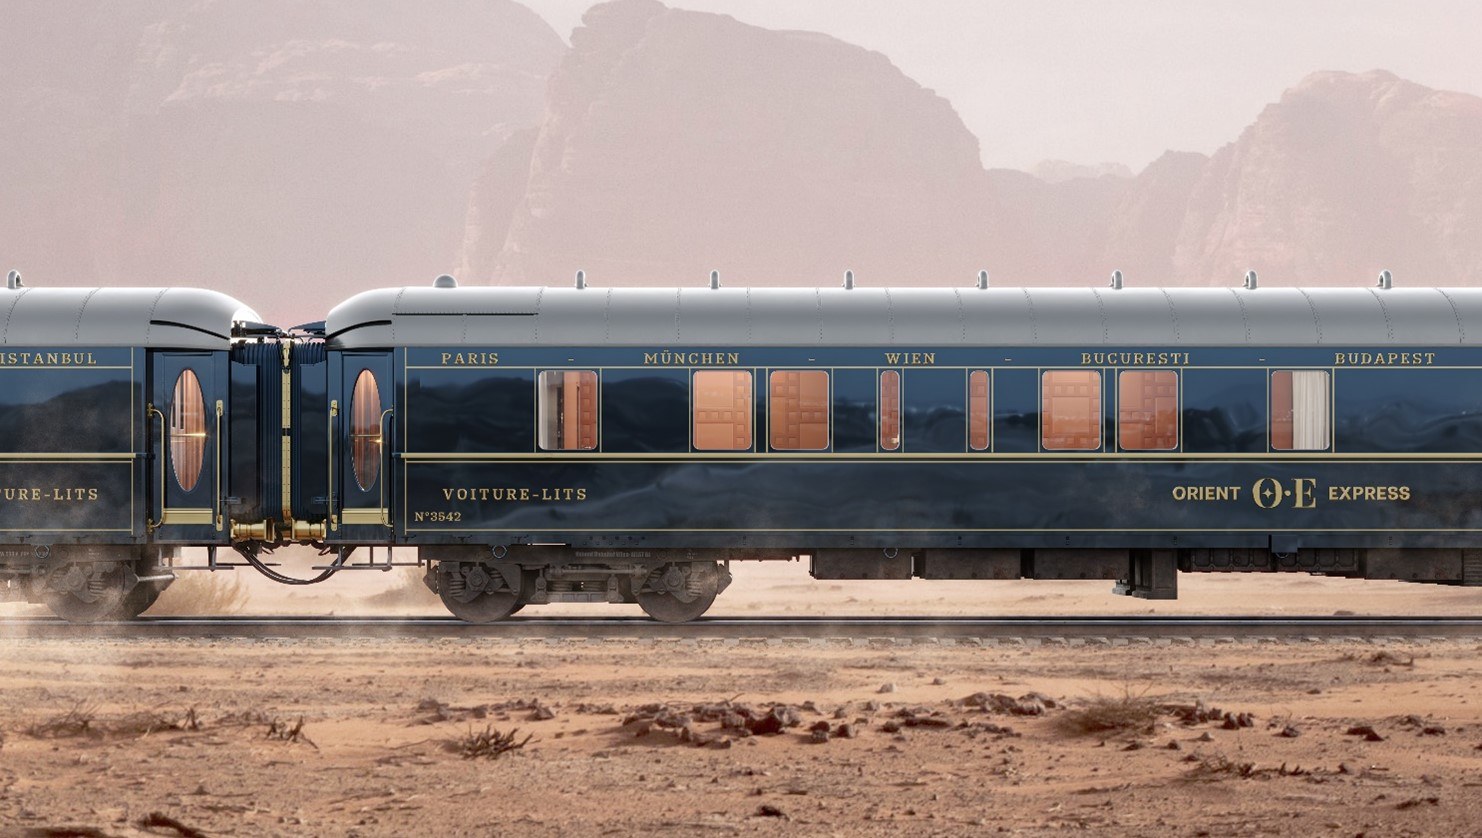 The Orient Express exterior